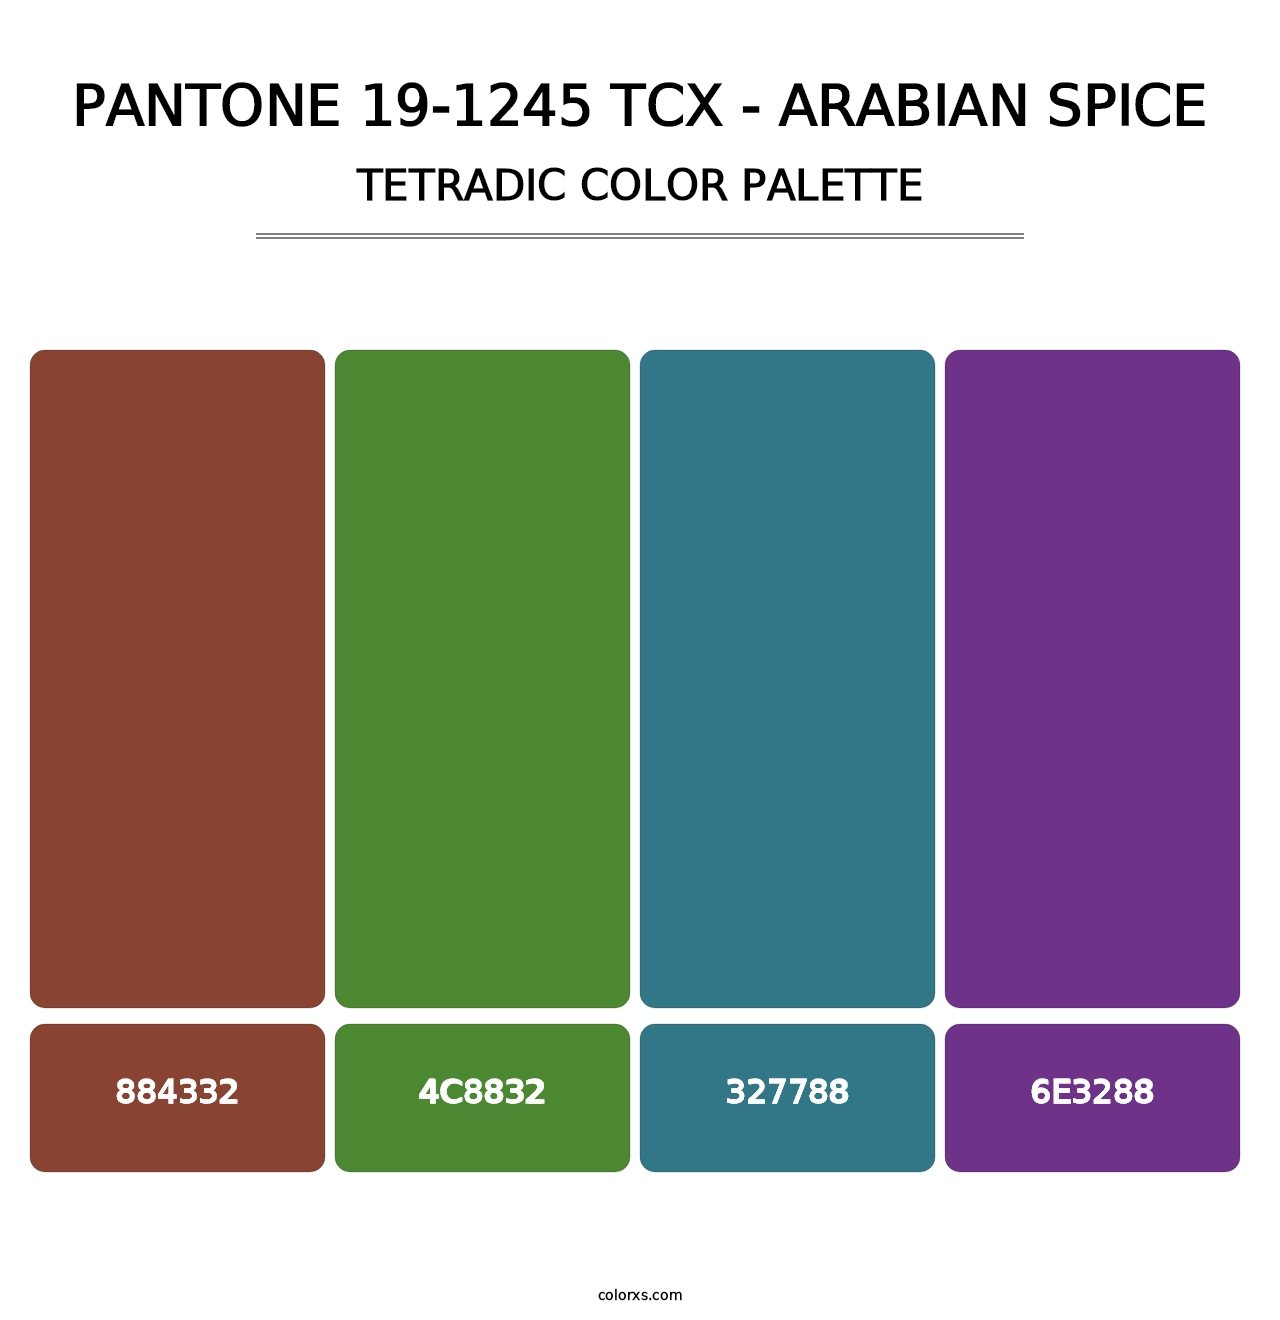 PANTONE 19-1245 TCX - Arabian Spice - Tetradic Color Palette